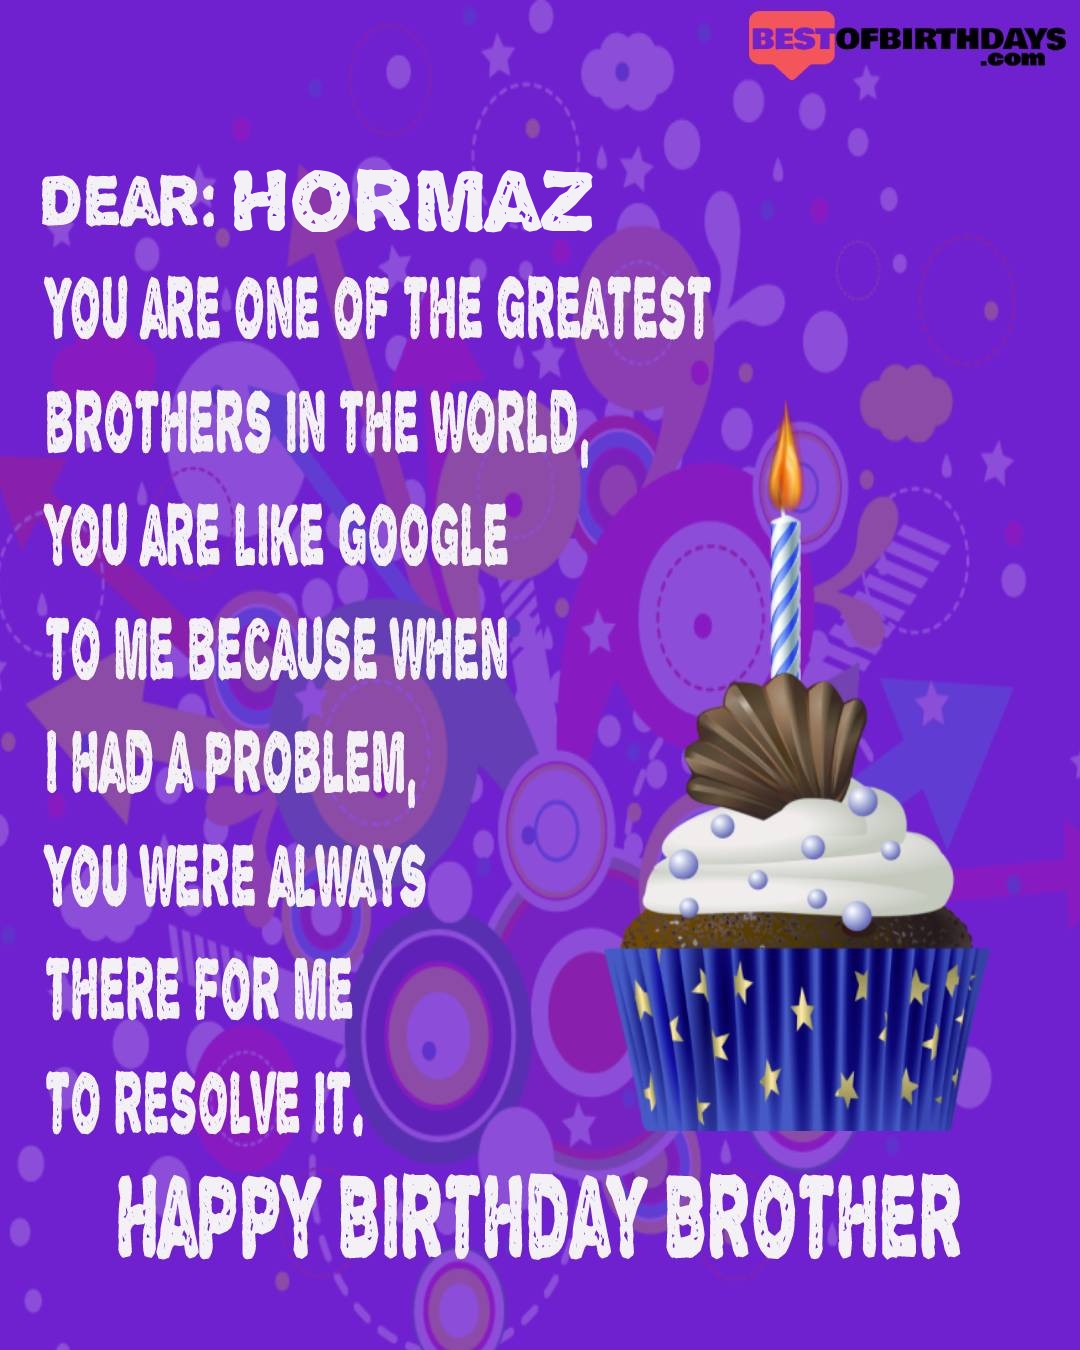 Happy birthday hormaz bhai brother bro